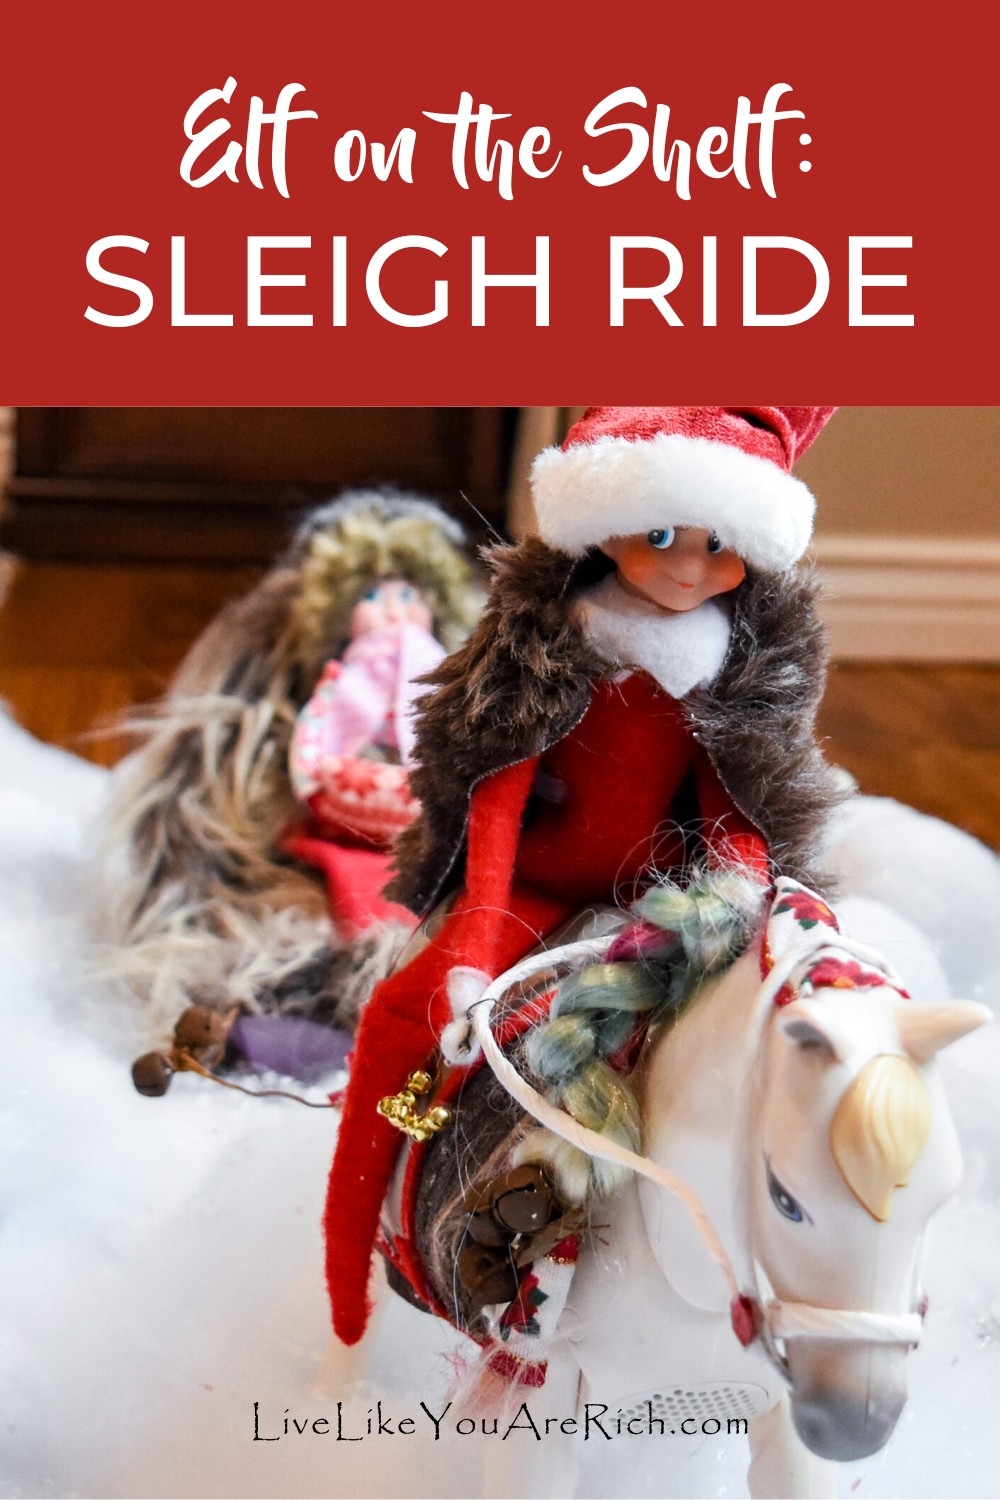 Elf on the Shelf: Sleigh Ride